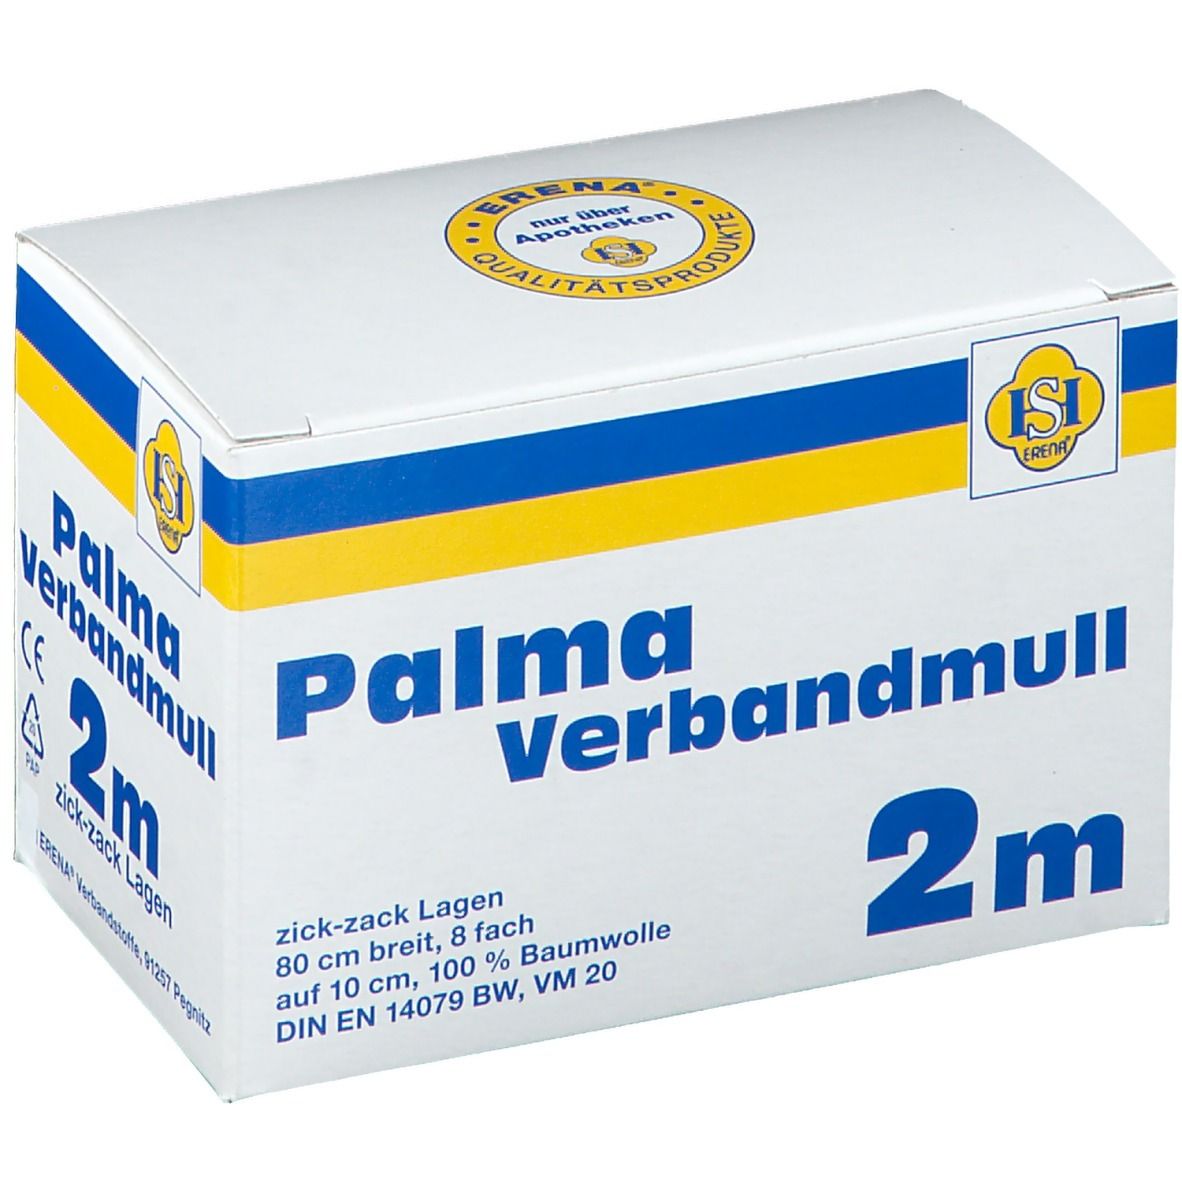 Palma Verbandmull Zick-zack Lagen